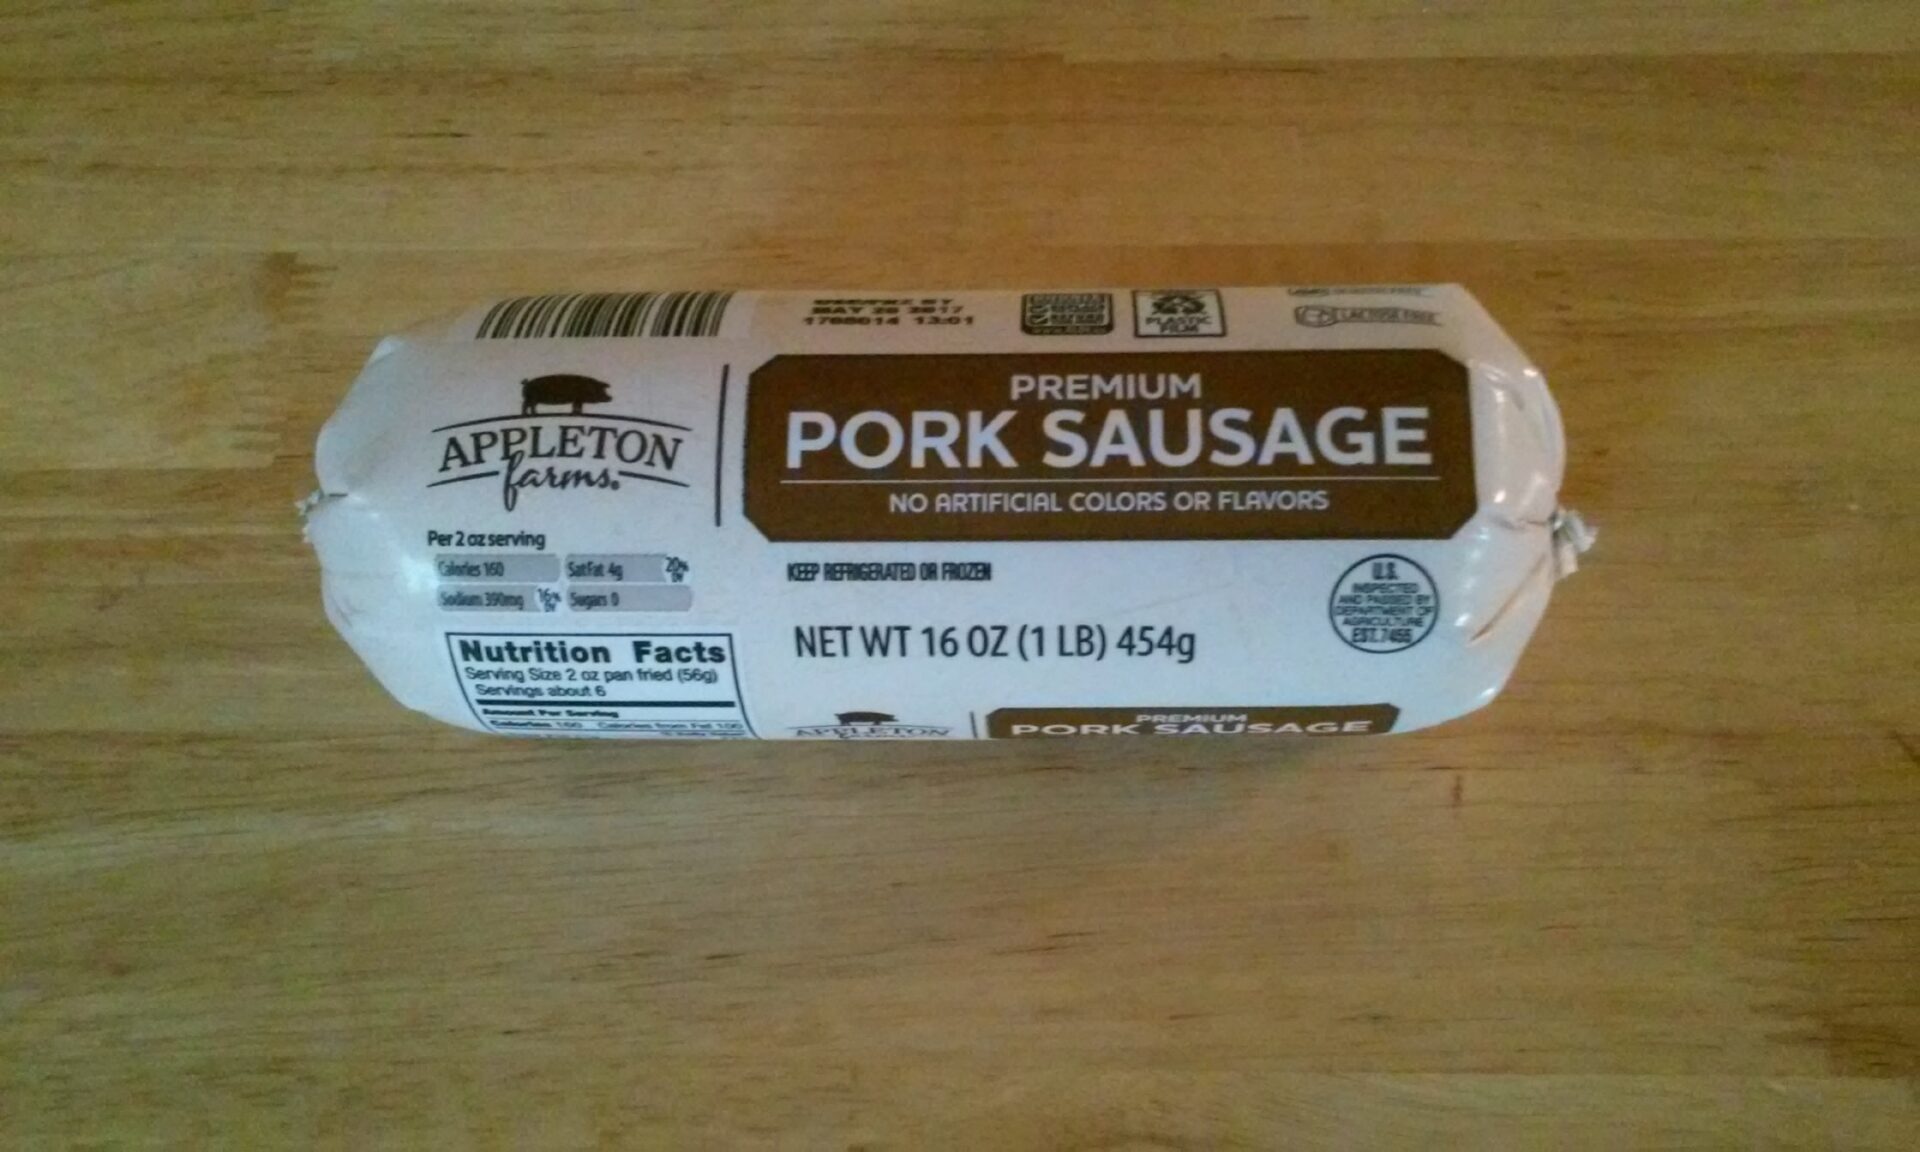 Appleton Farms Premium Pork Sausage